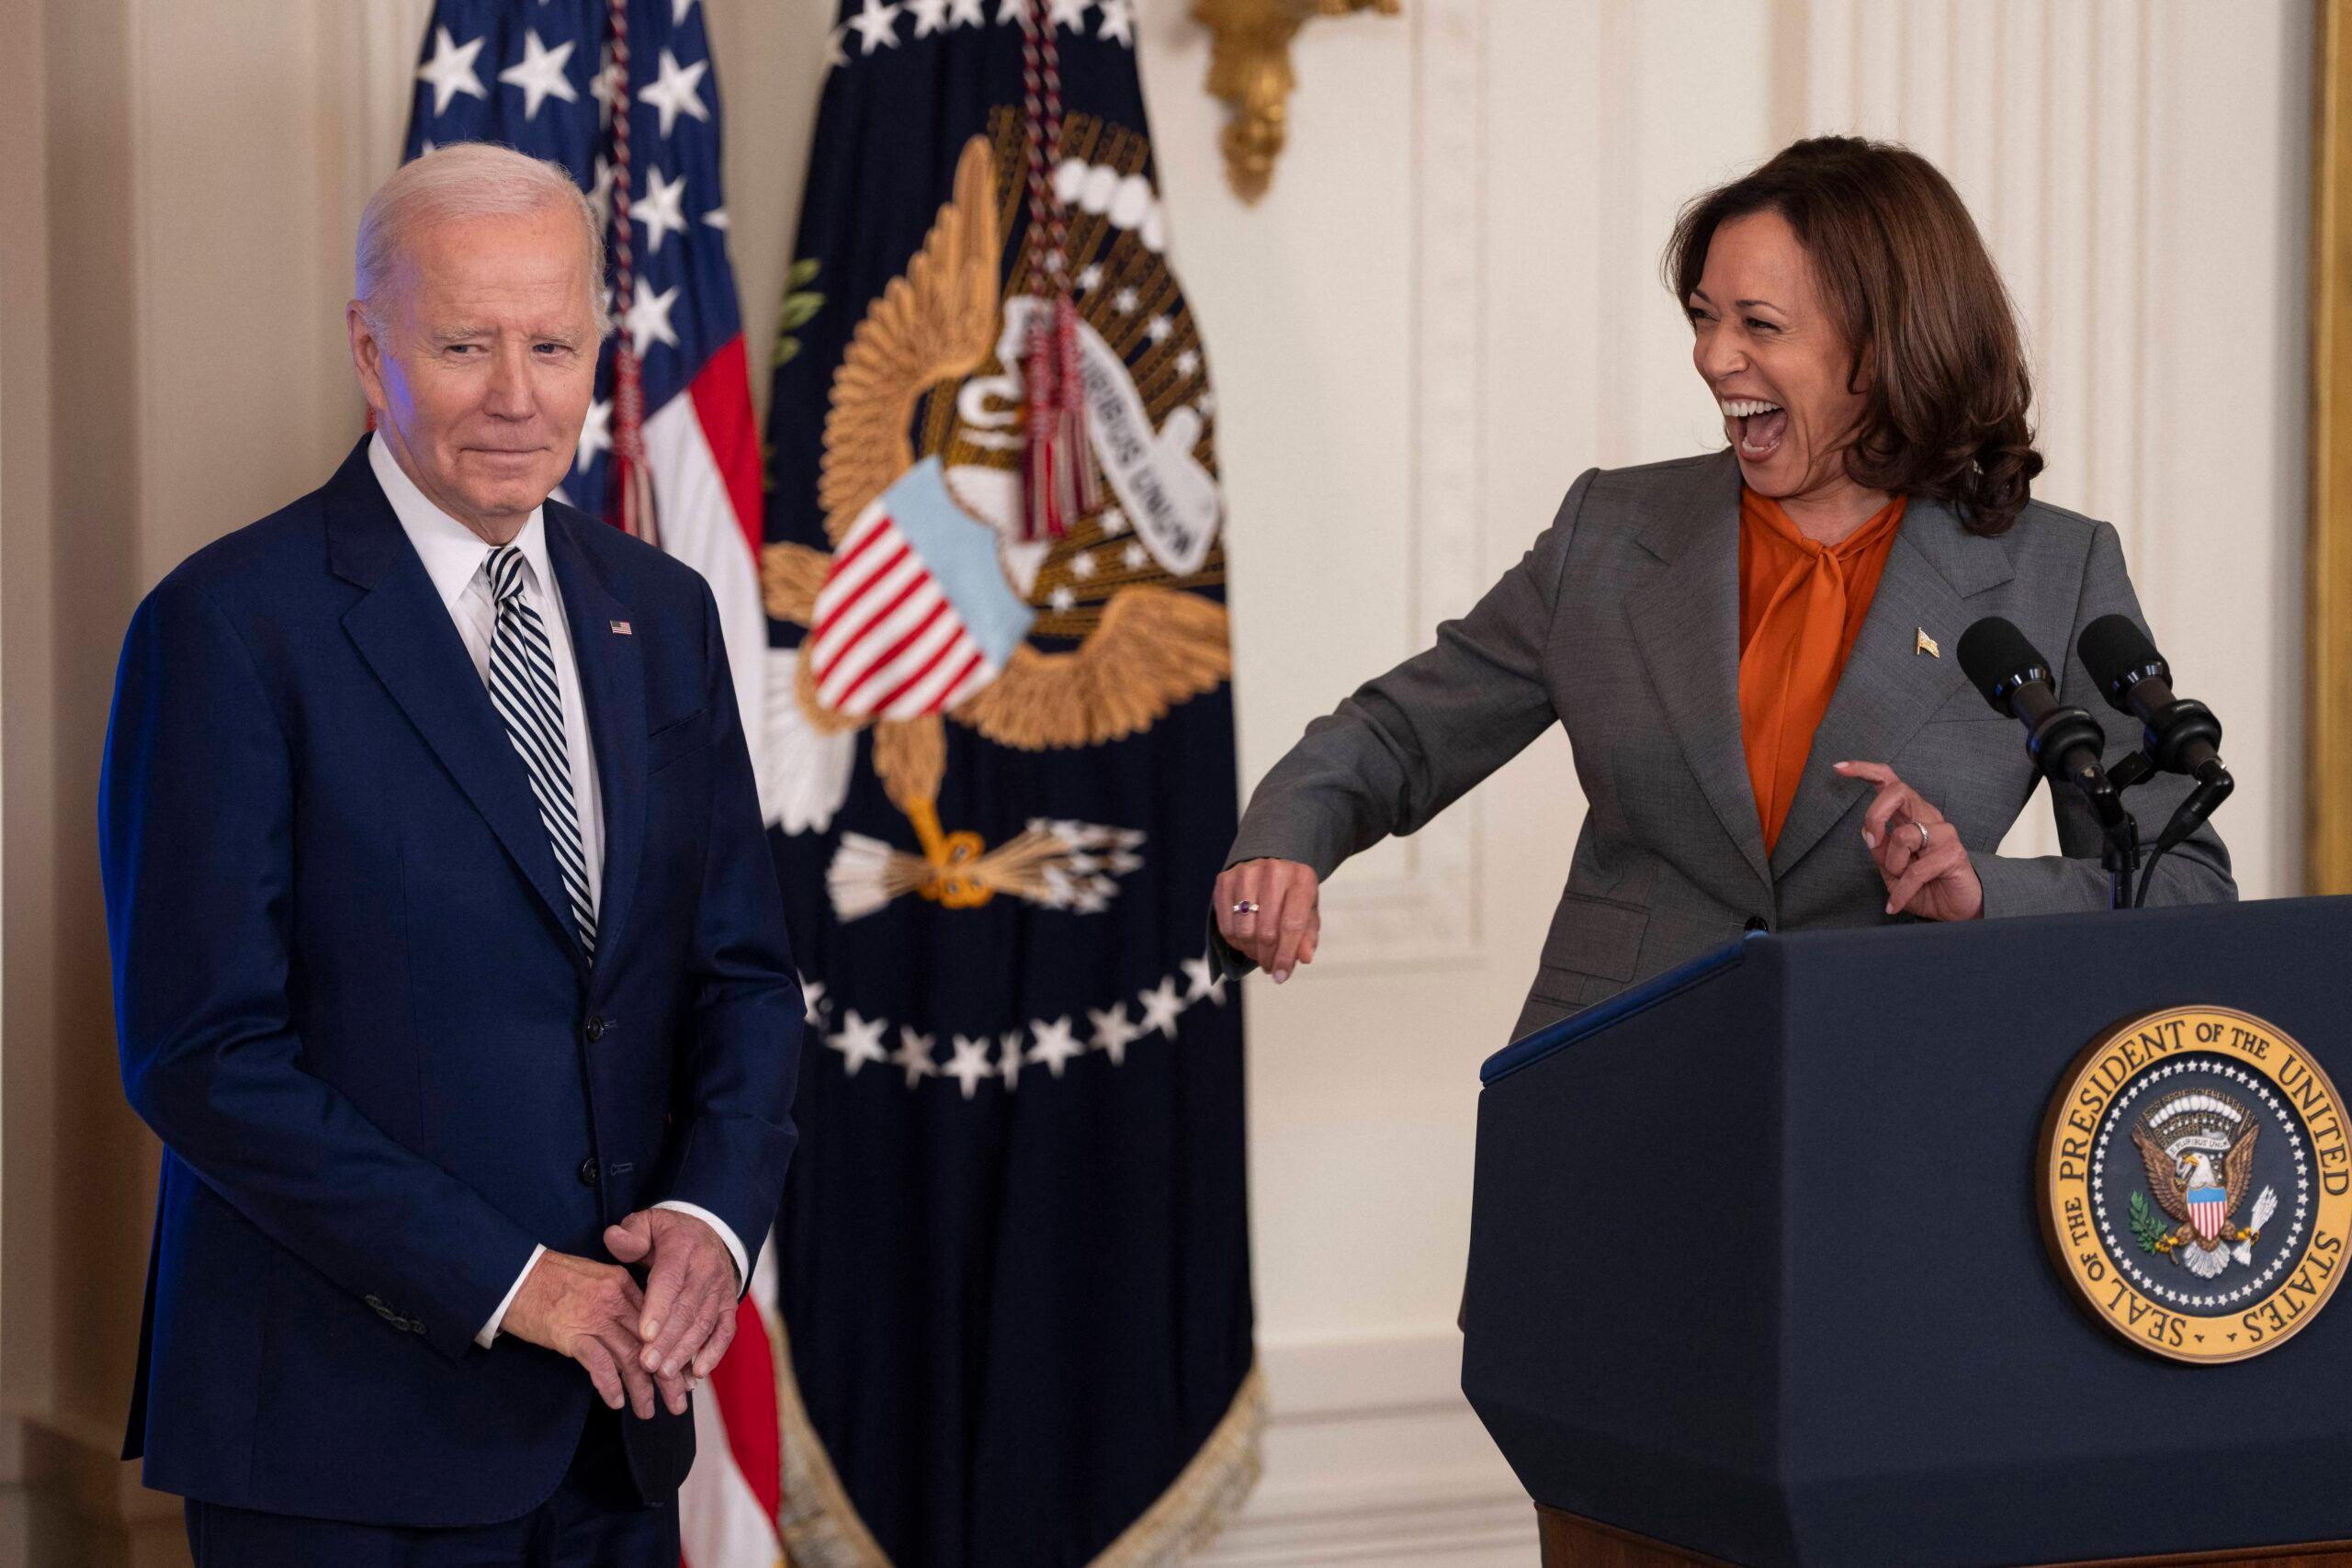 Joe Biden's Latest 'Senile' Moment, Calls VP Kamala Harris The 'President'